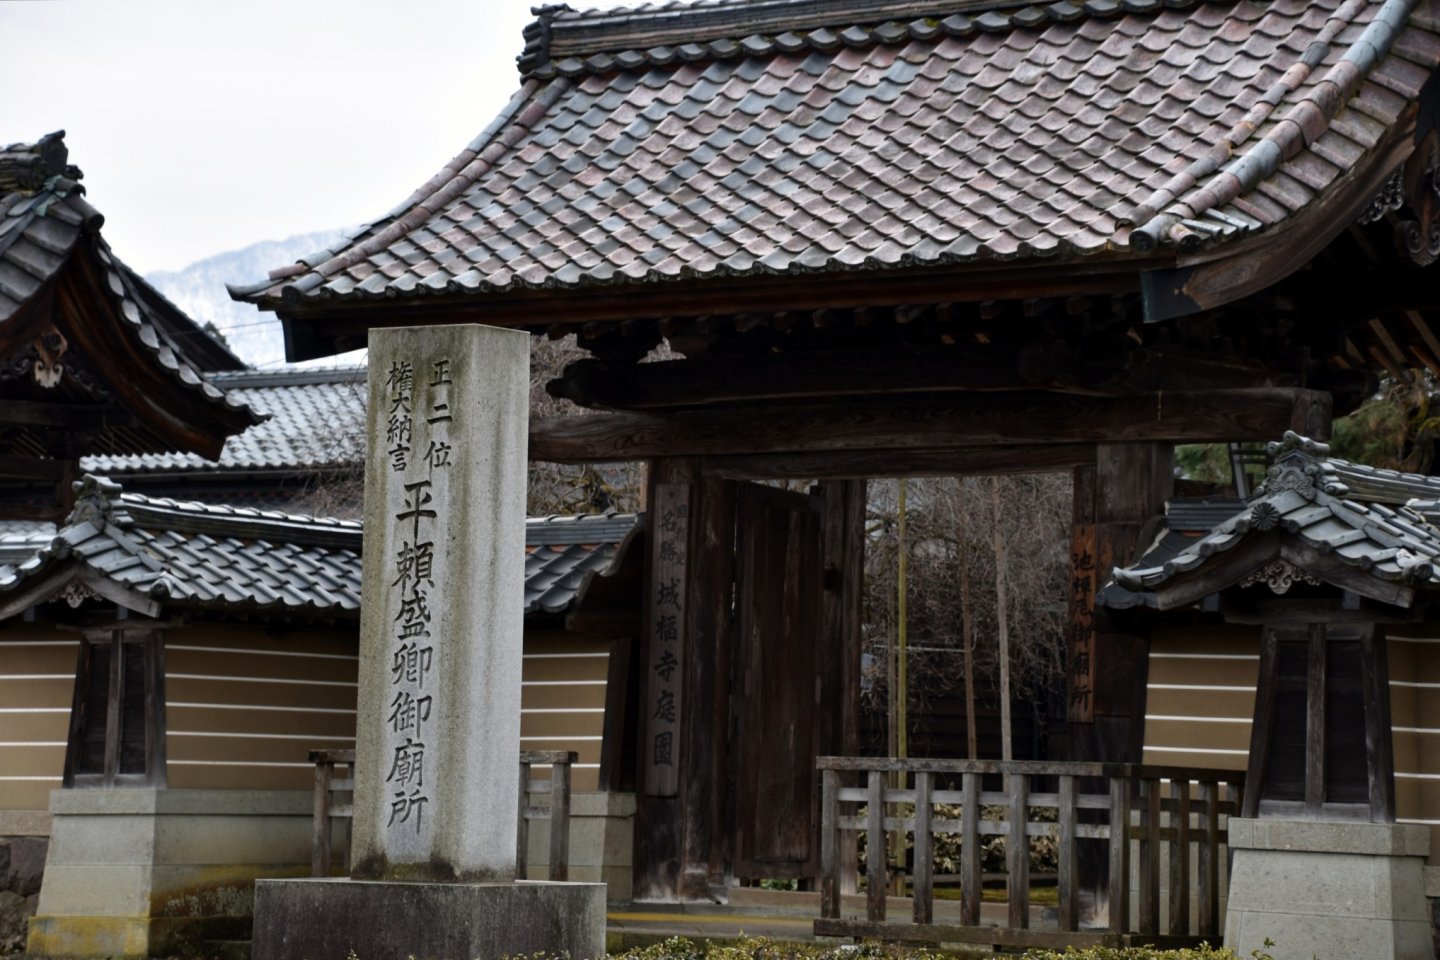 Main gate of Jofukuji Temple. The stone marker of Taira-no Yorimori stands in front of it. He was a step-brother of the samurai ruler Taira-no Kiyomori and the real son of Ike-no Zenni, who saved the life of Minamoto-no Yoritomo.